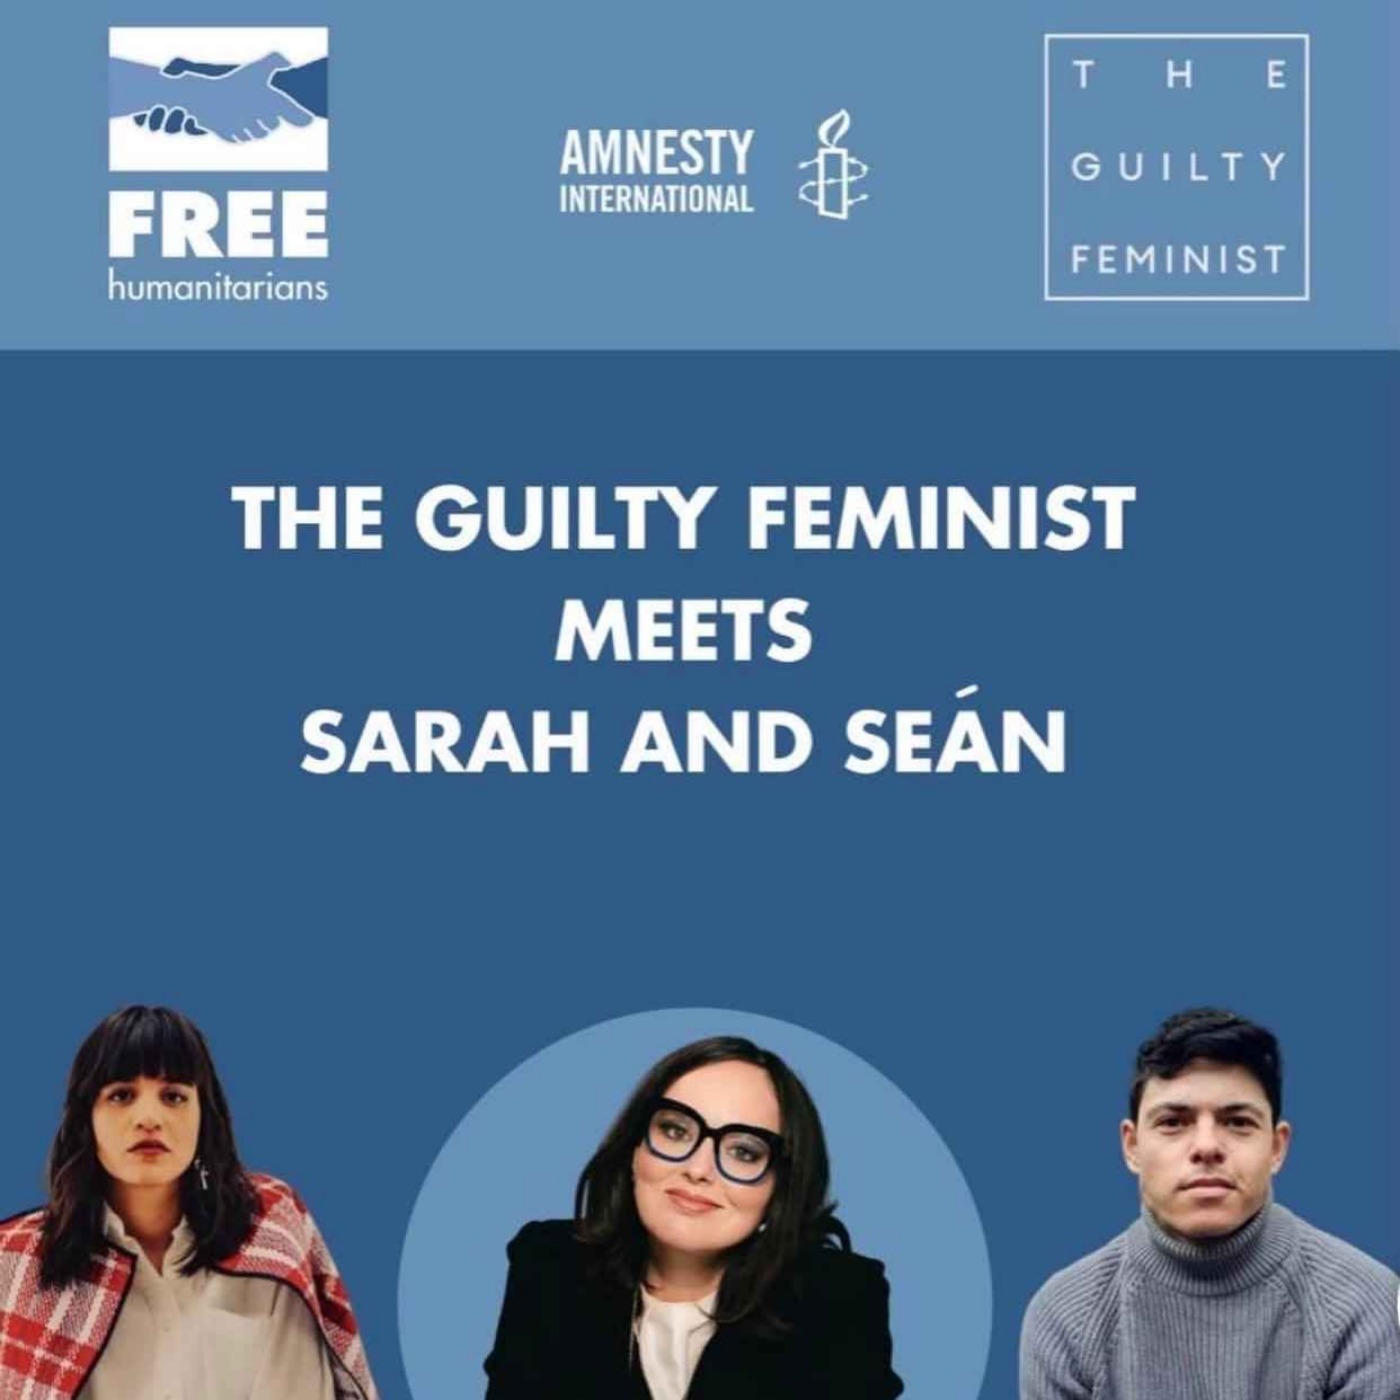 Free Humanitarians - The Guilty Feminist meets Sarah and Sean